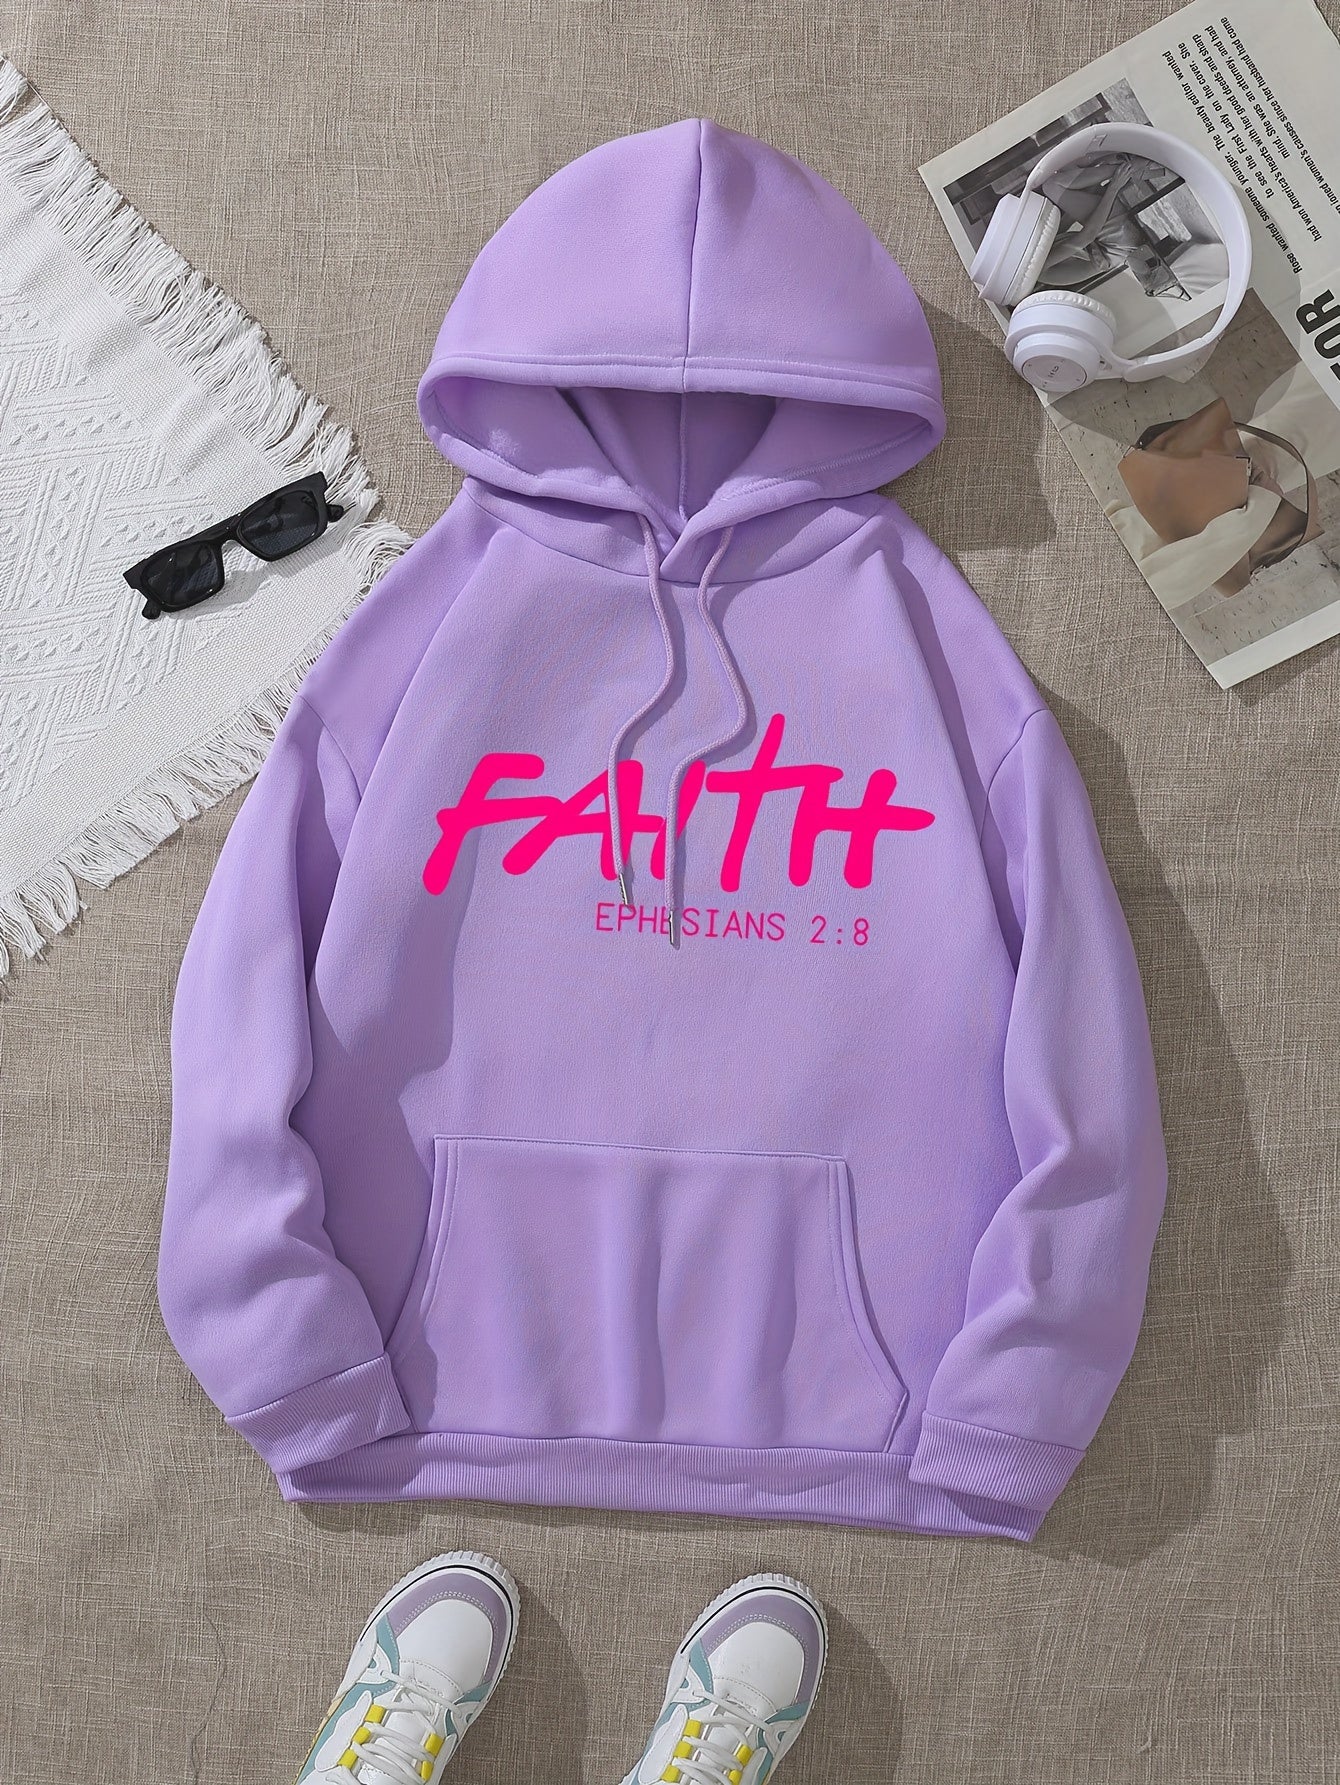 Ephesians 2:8 Faith Women's Christian Pullover Hooded Sweatshirt claimedbygoddesigns